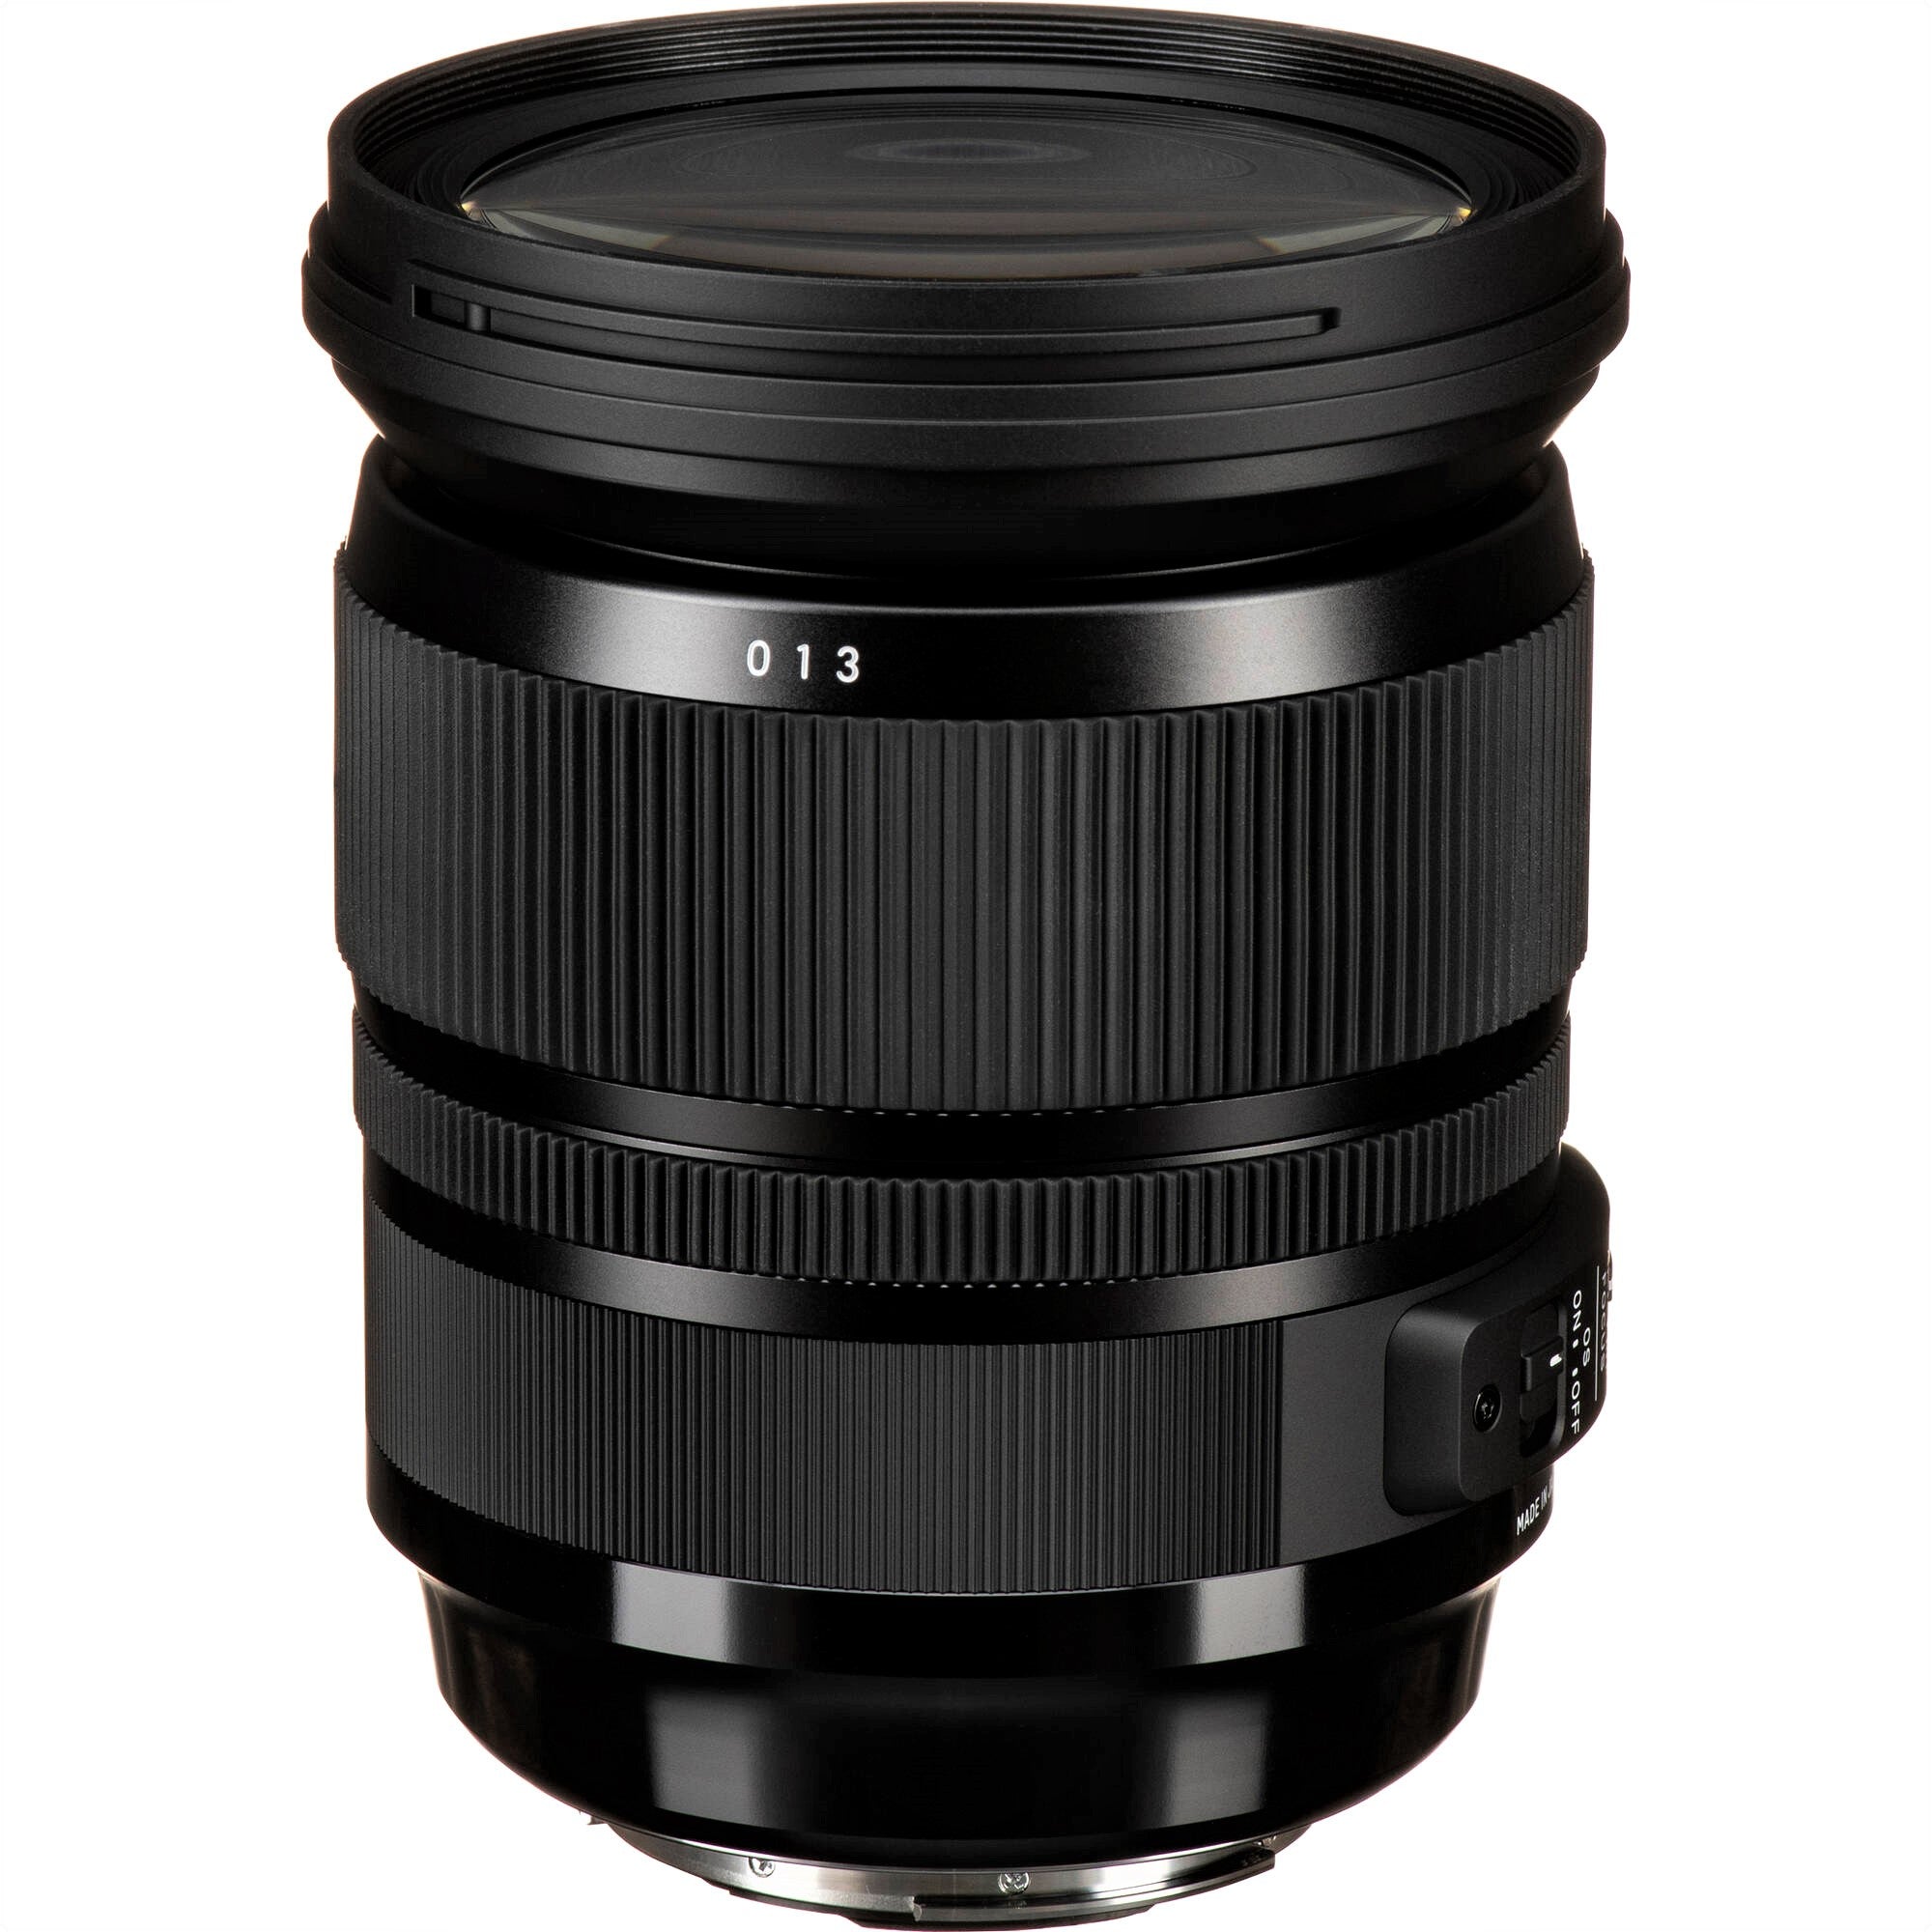 Sigma 24-105mm F4.0 DG OS HSM Art Lens (Canon EF)